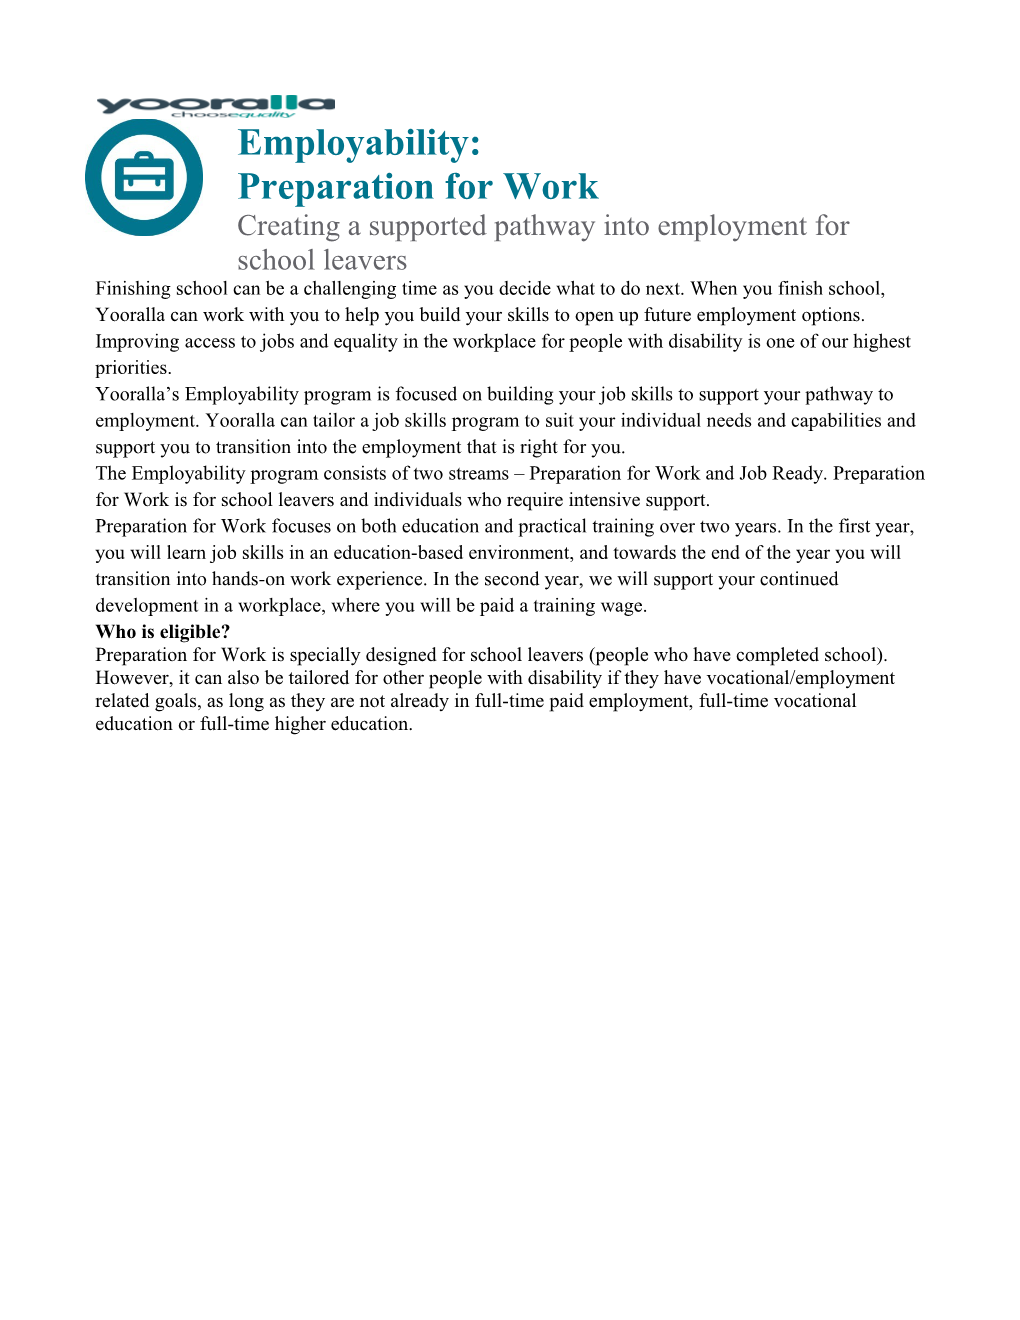 Employability: Preparation for Work